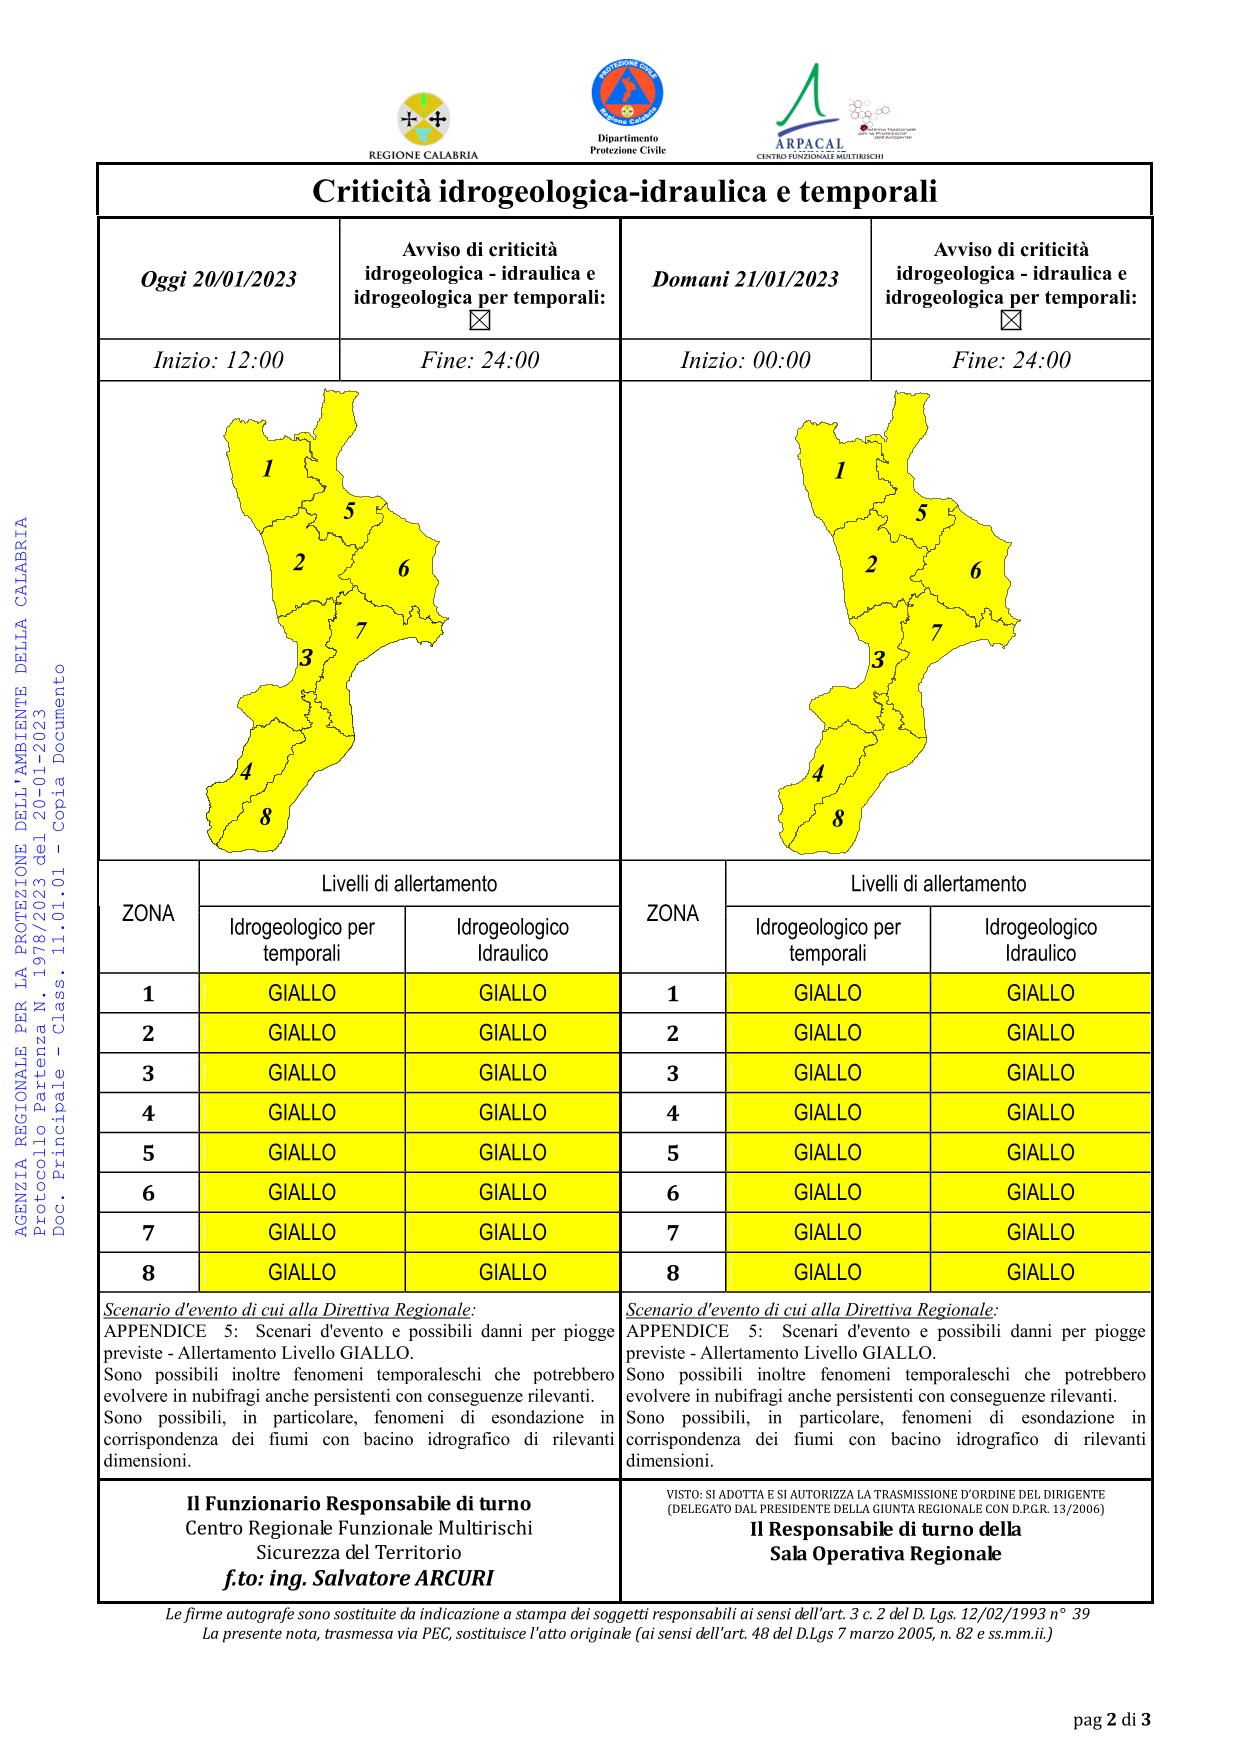 Criticità idrogeologica-idraulica e temporali in Calabria 20-01-2023